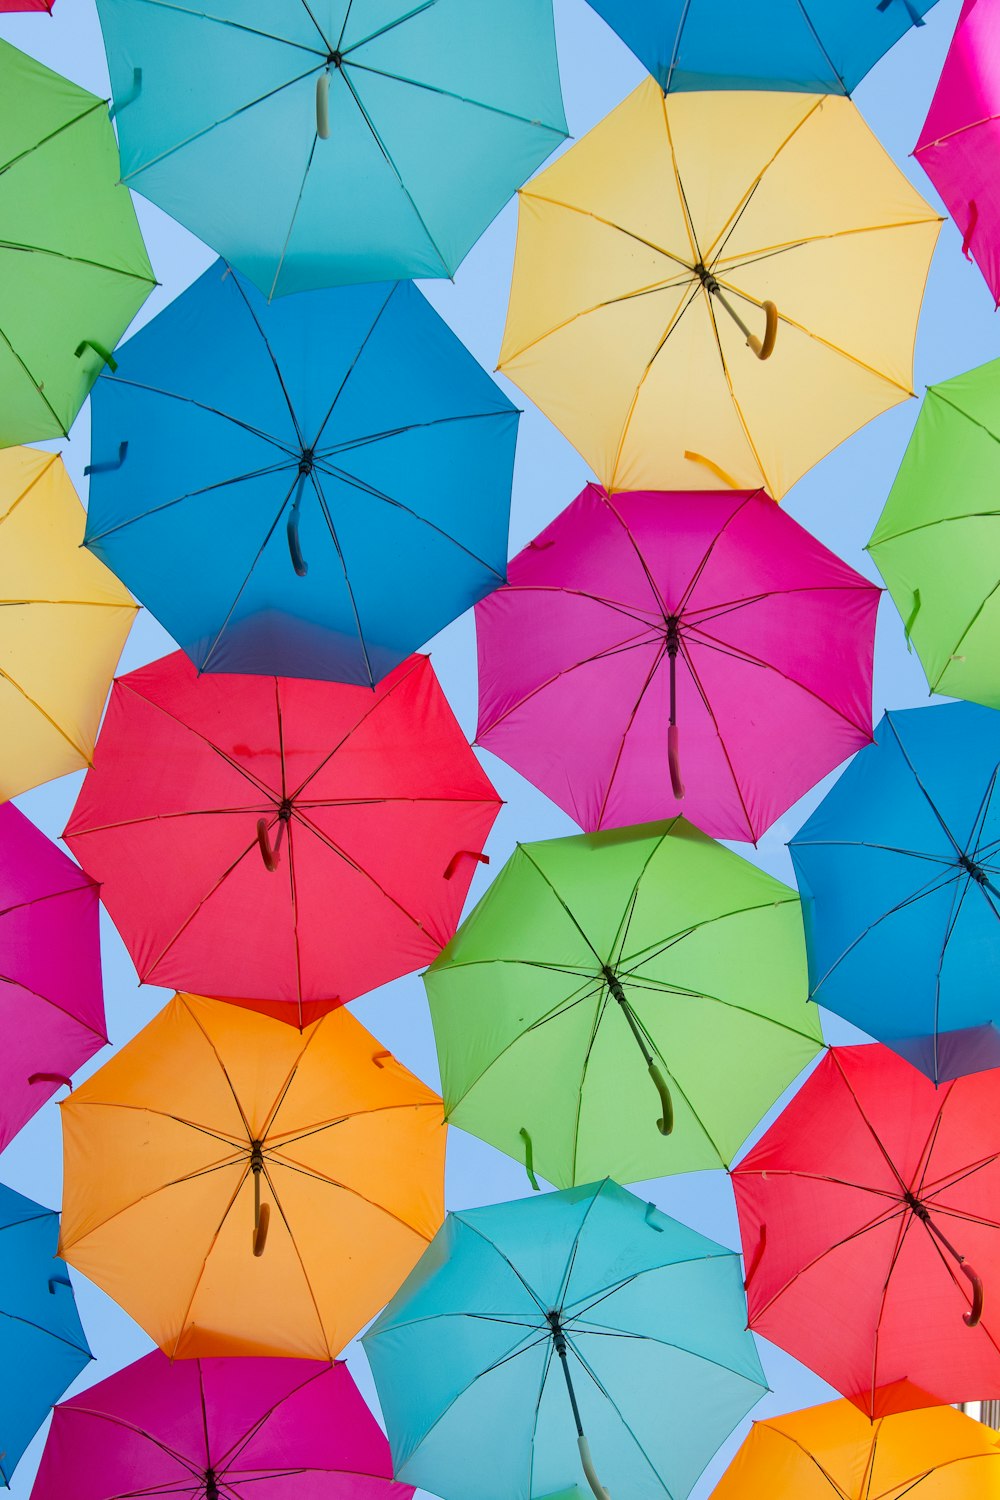 assorted-color umbrellas